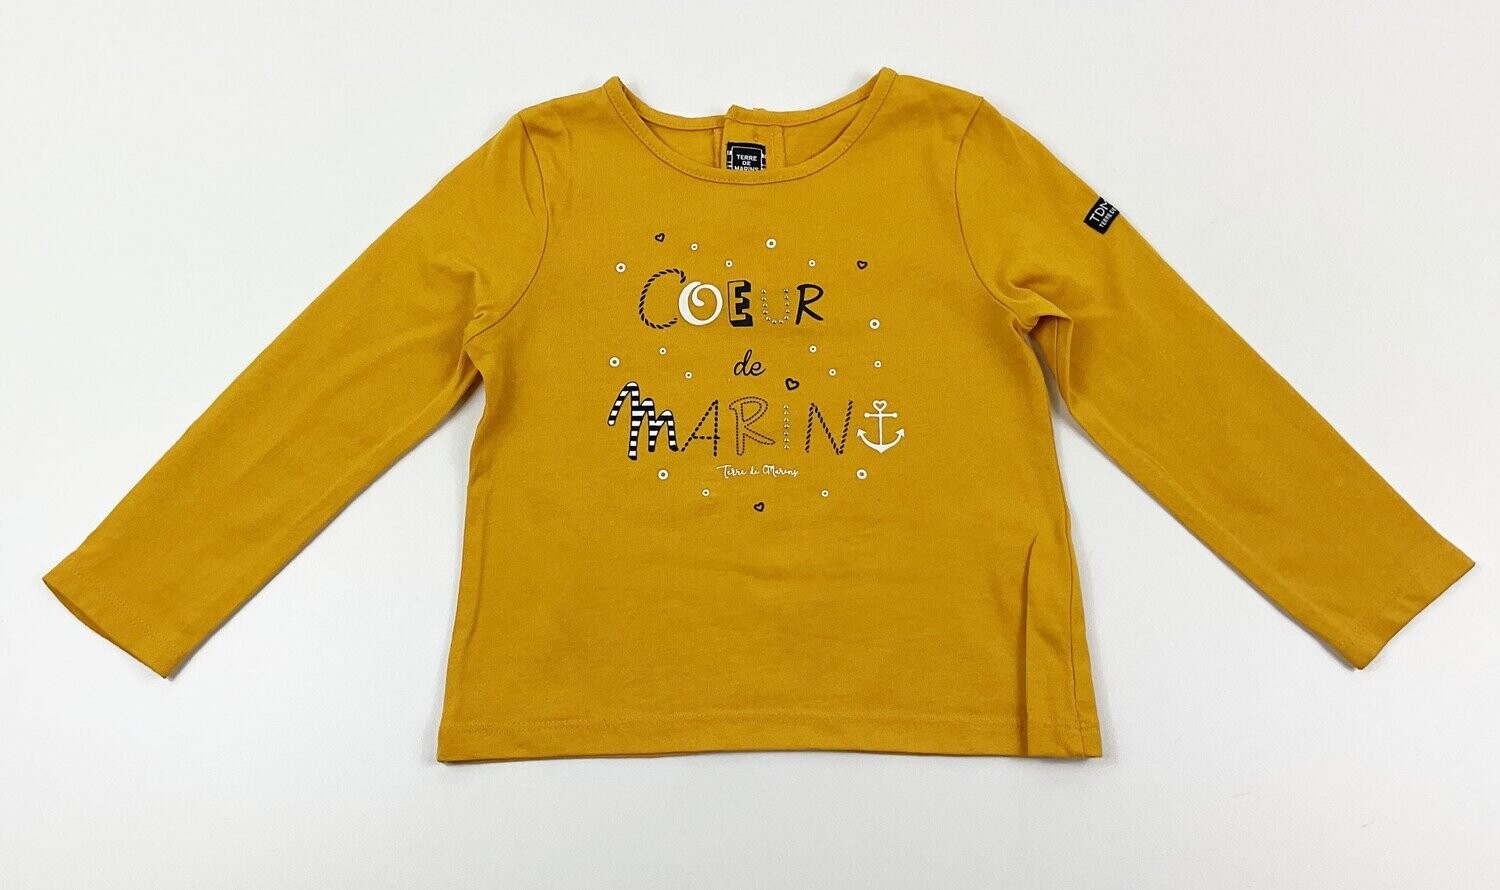 TERRE DE MARINS - Tee-shirt moutarde cœur de marin - 23 mois